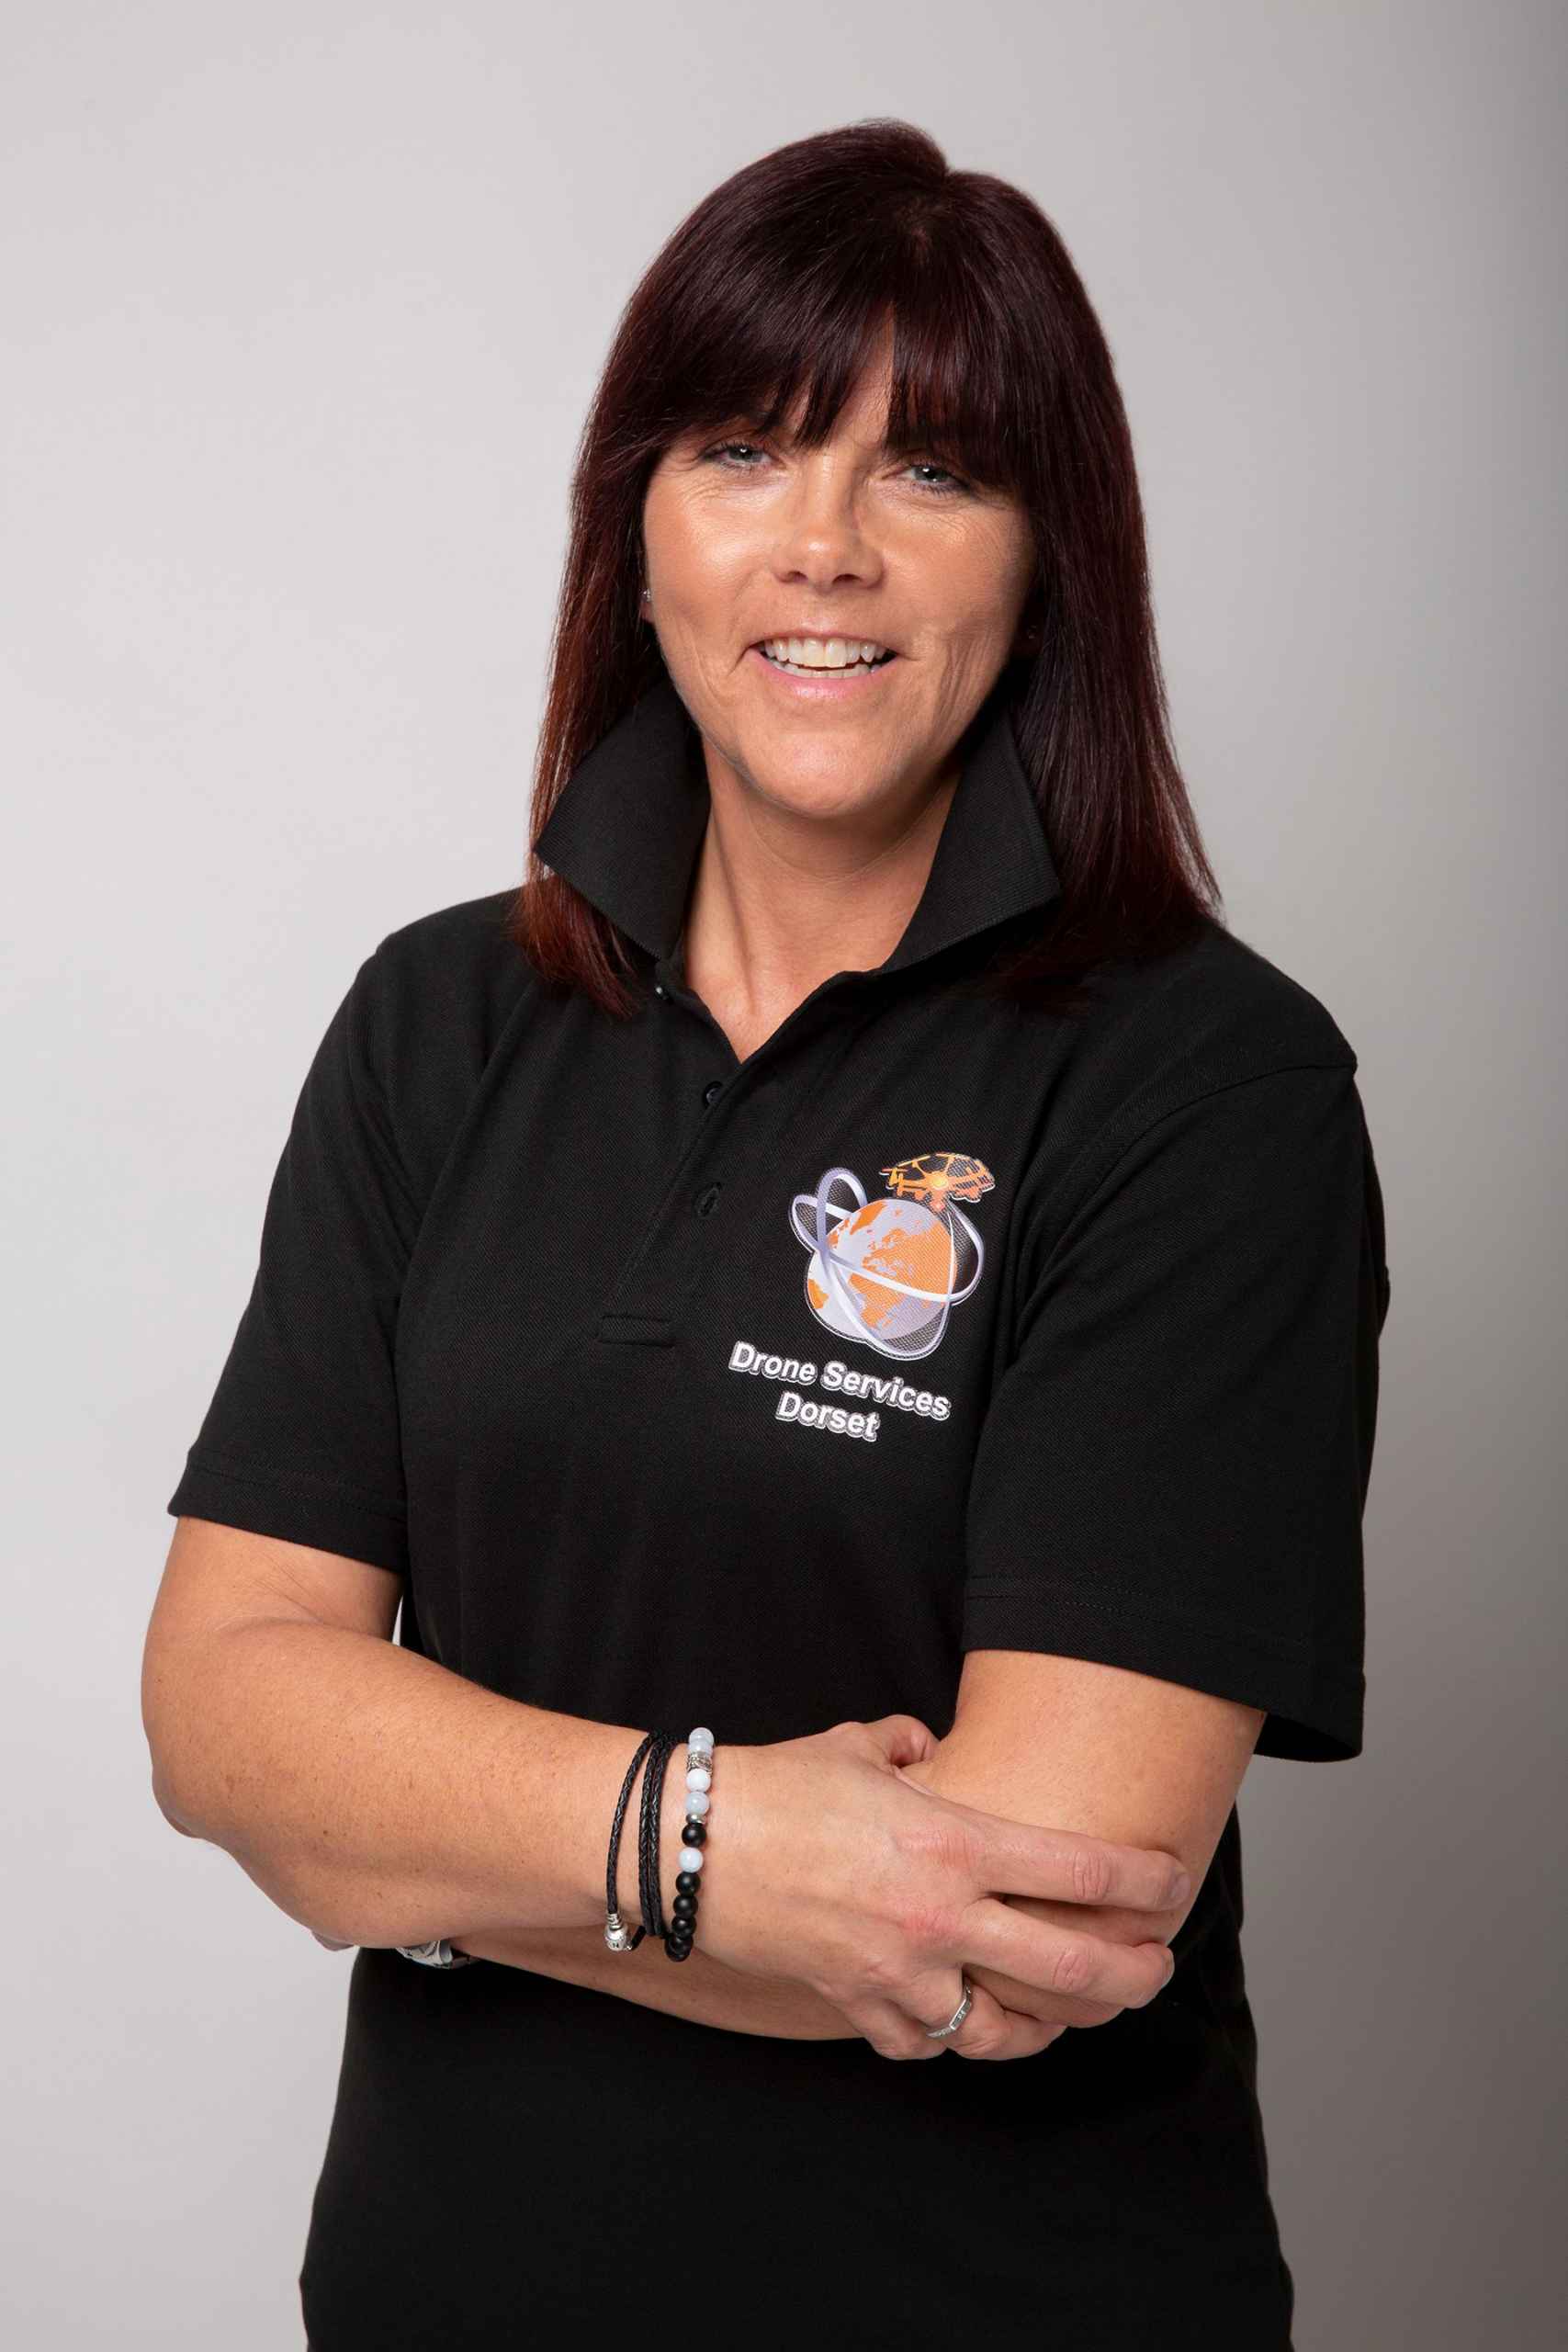 Claire DuPavey - Meet the team at Drone Services Dorset